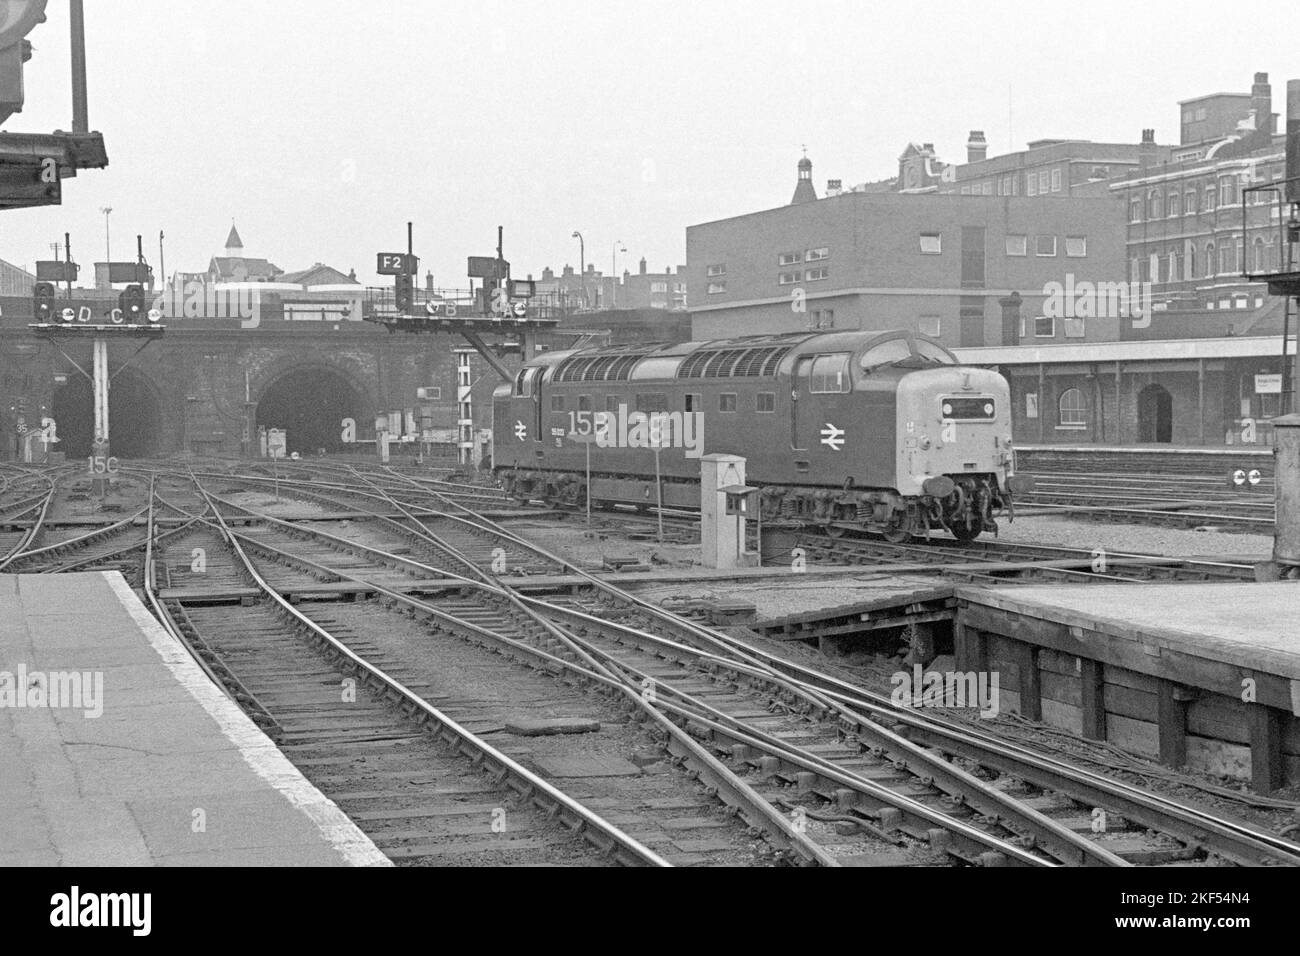 Original britische Eisenbahn Diesel Lokomotive Baureihe 55 Deltic Nummer 55022 Royal scots grau Könige Cross Station Ende 1970s Anfang 1980s Stockfoto